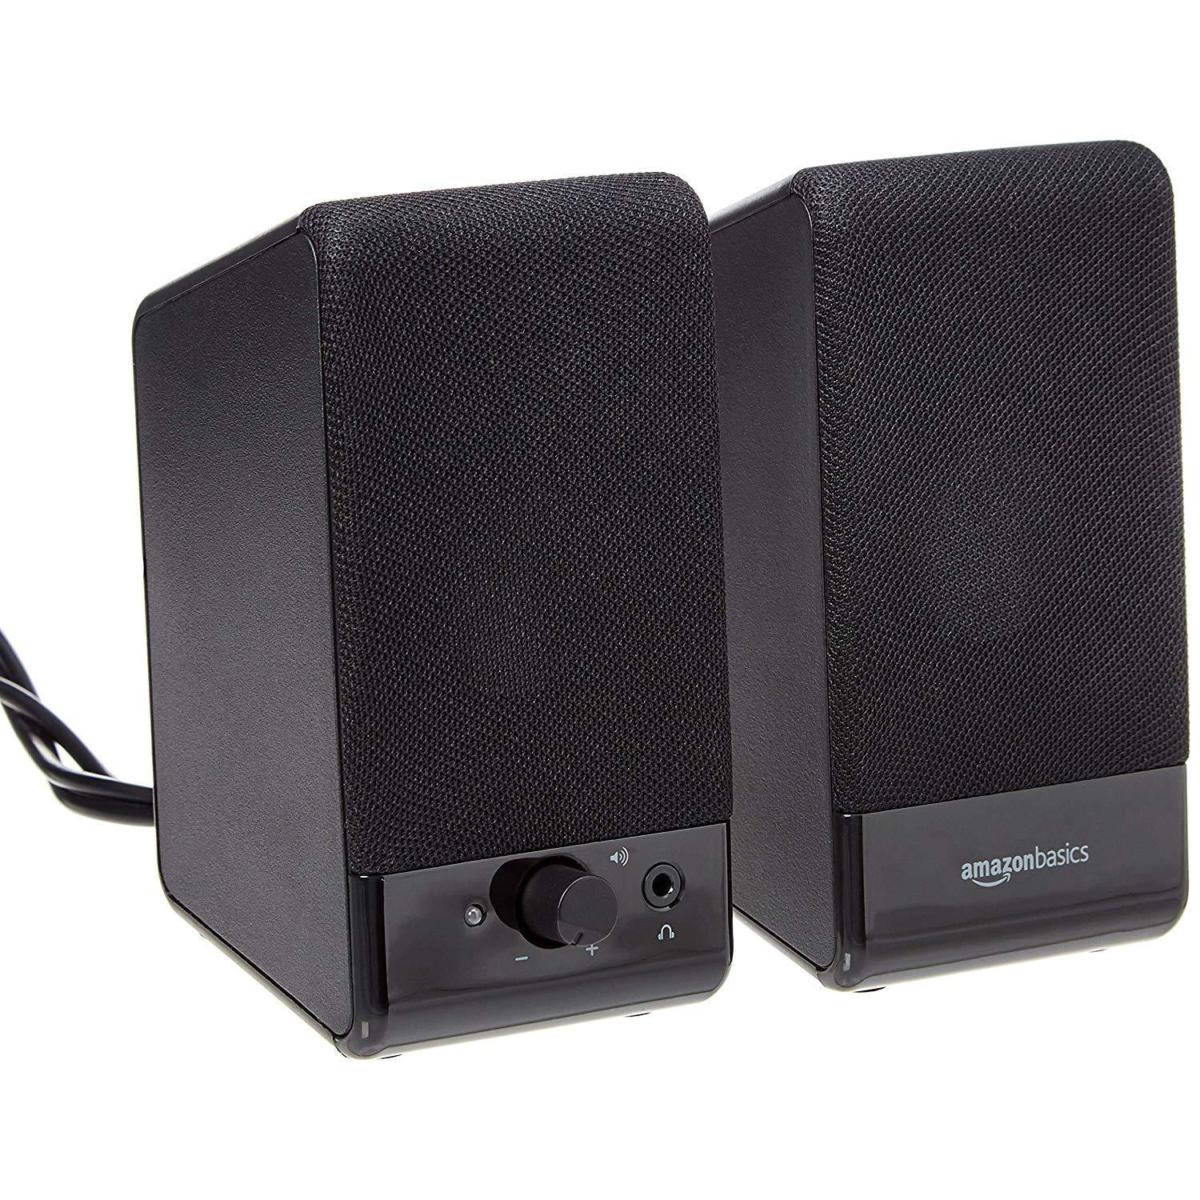 amazonbasics computer speakers